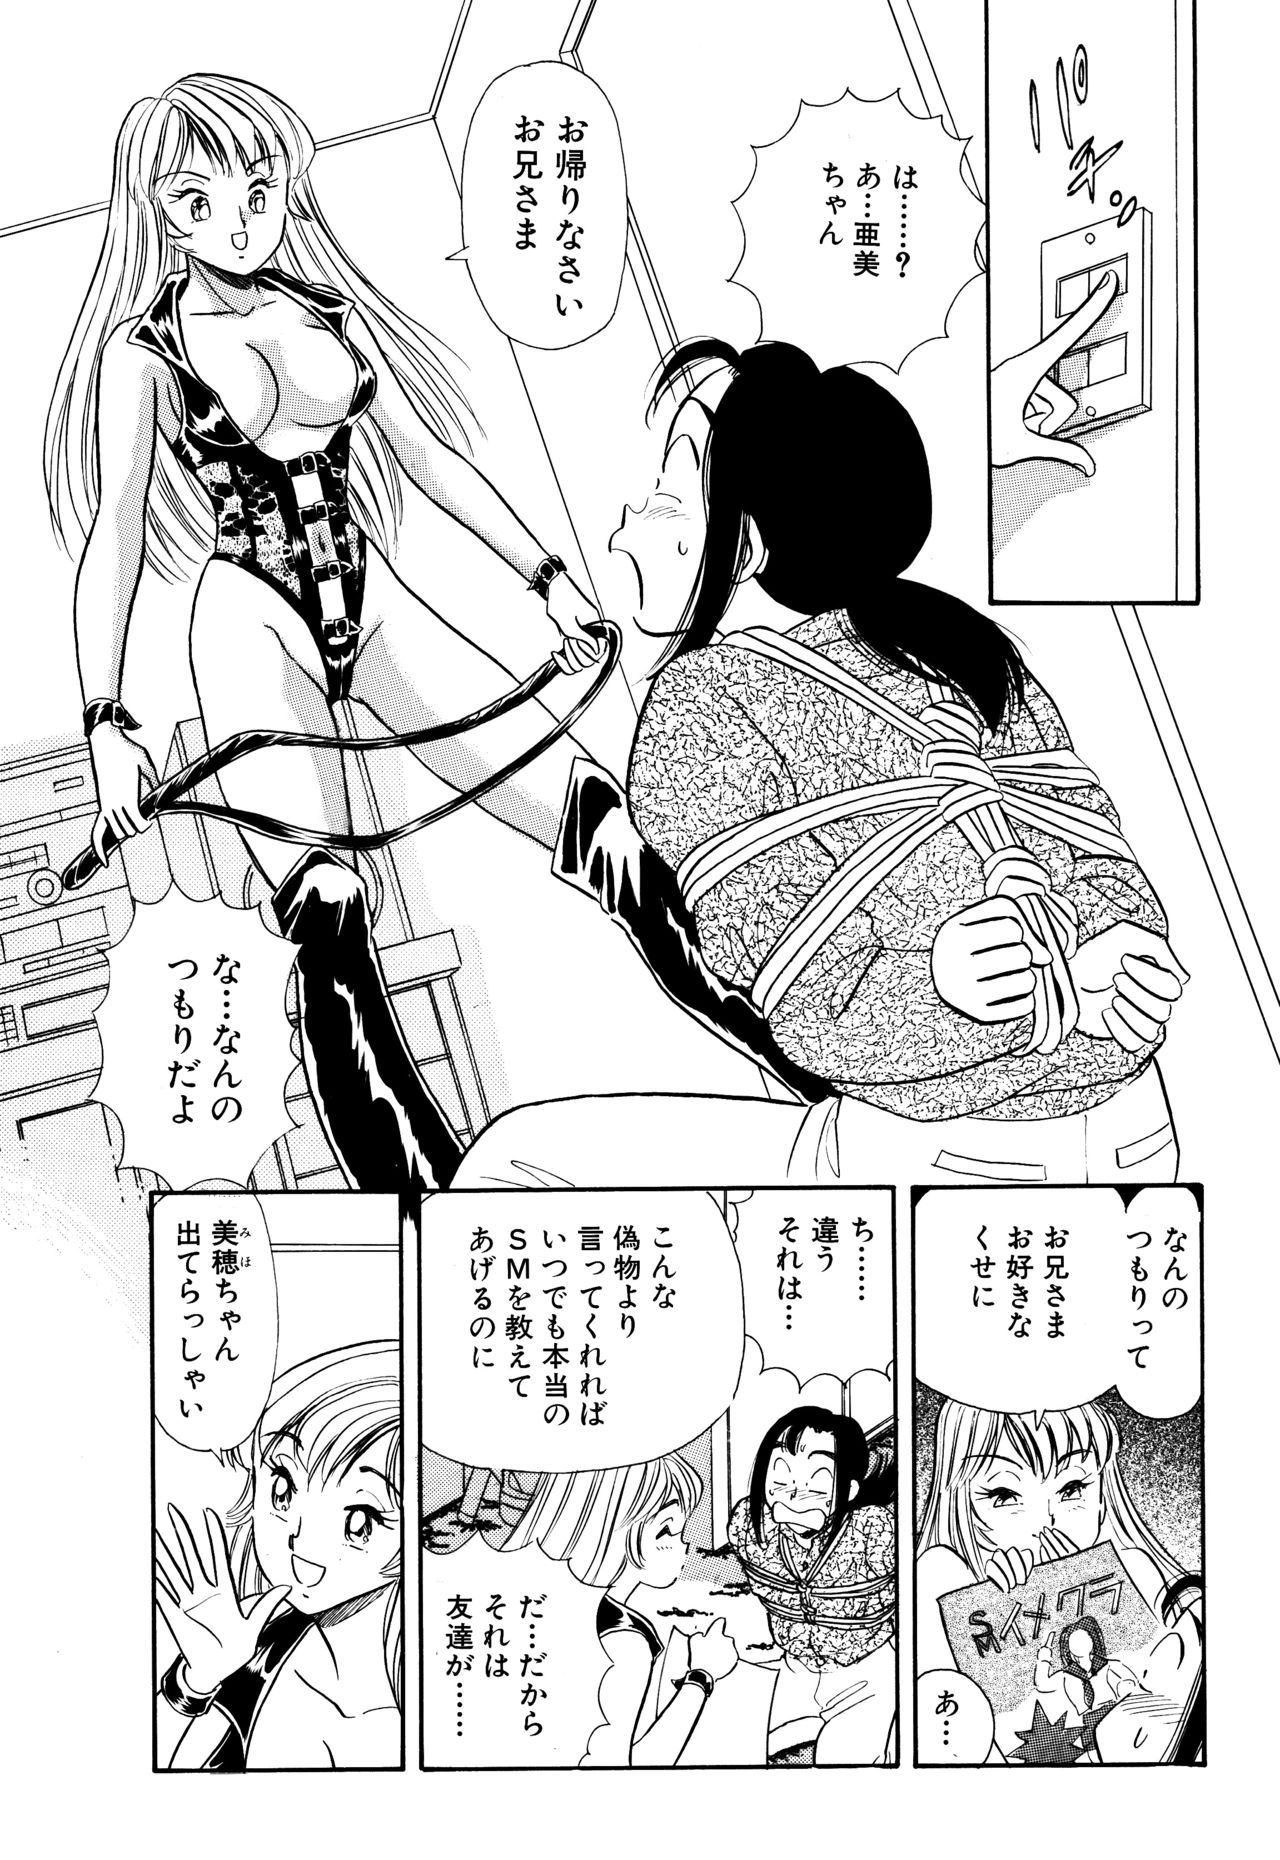 [Marumi Kikaku (Satomaru)] S&M Junkie 2 - Stepsister Affection and Threesome [丸美企画 (サトマル)]  SMジャンキー・義妹の愛奴と三人プレイ